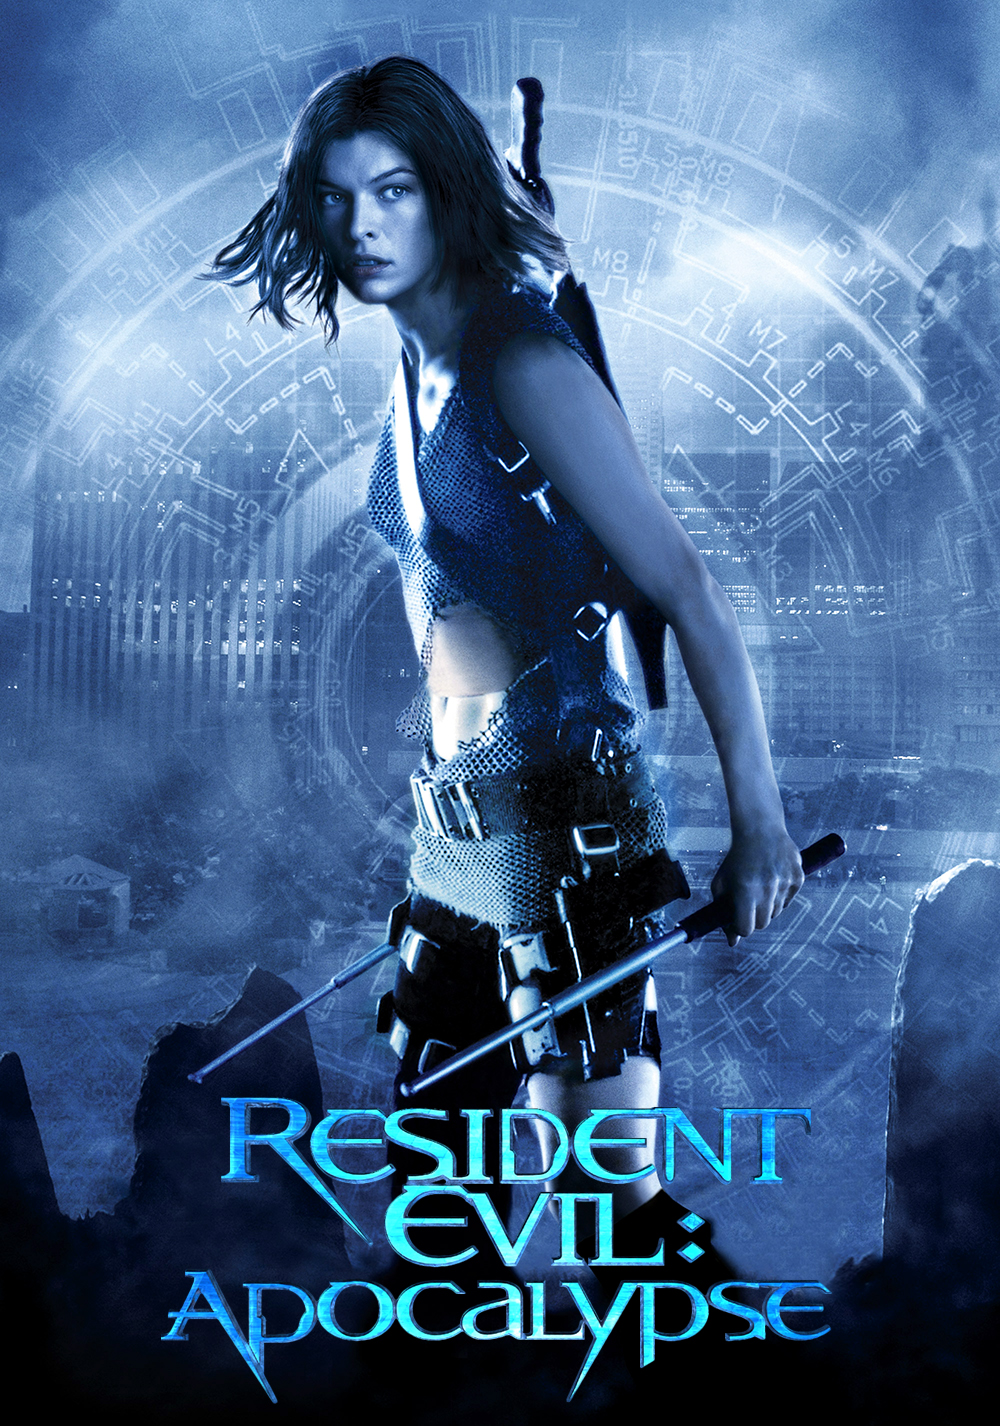 Stiahni si HD Filmy Resident Evil: Apokalypsa / Resident Evil: Apocalypse (2004)(CZ/EN)[1080p Remux] = CSFD 59%